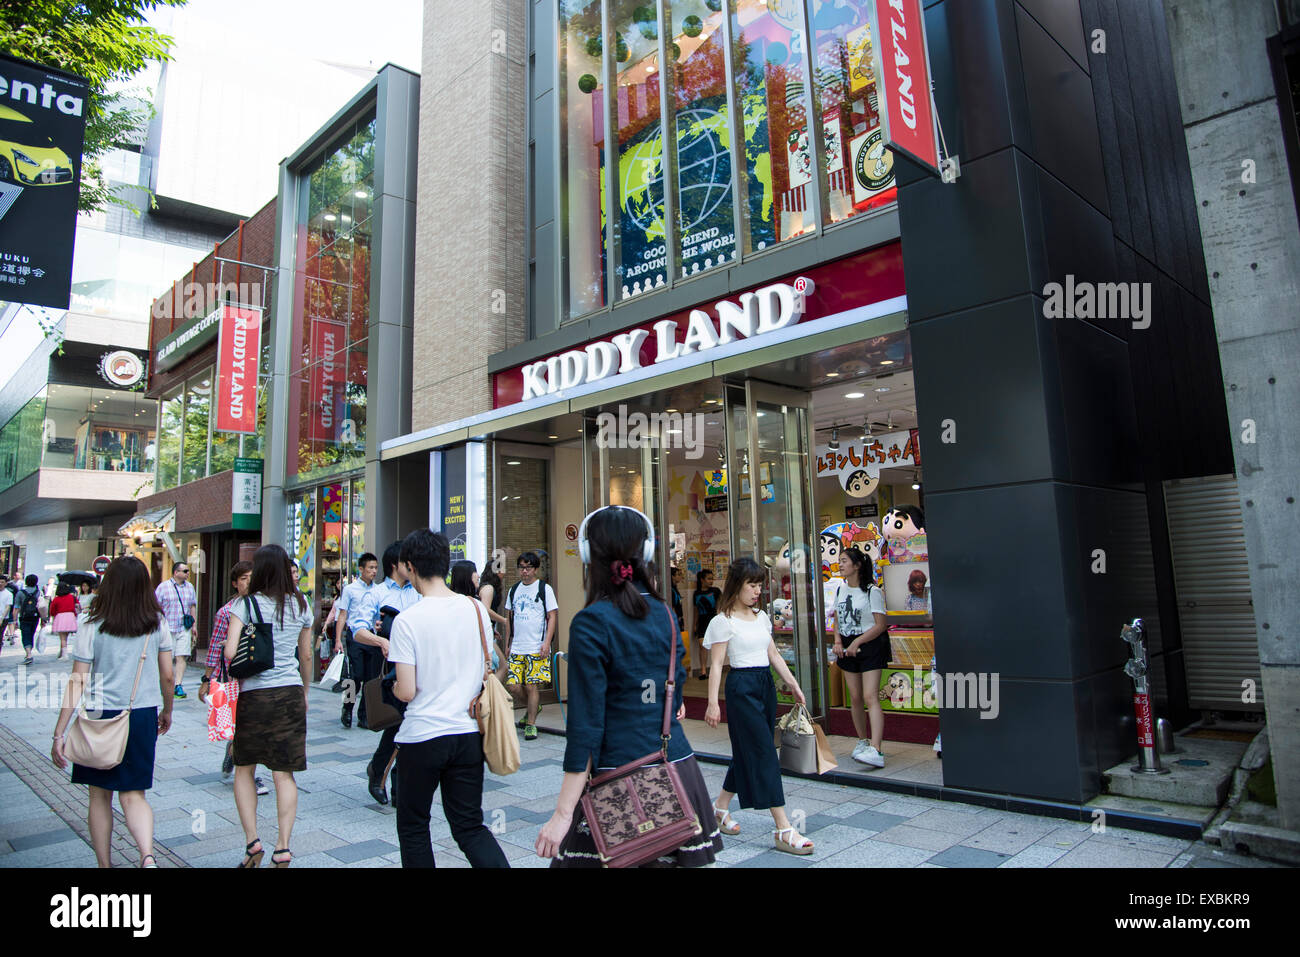 Kiddy Land, Omotesando, Shibuya-Ku, Tokyo, Japan Stockfoto